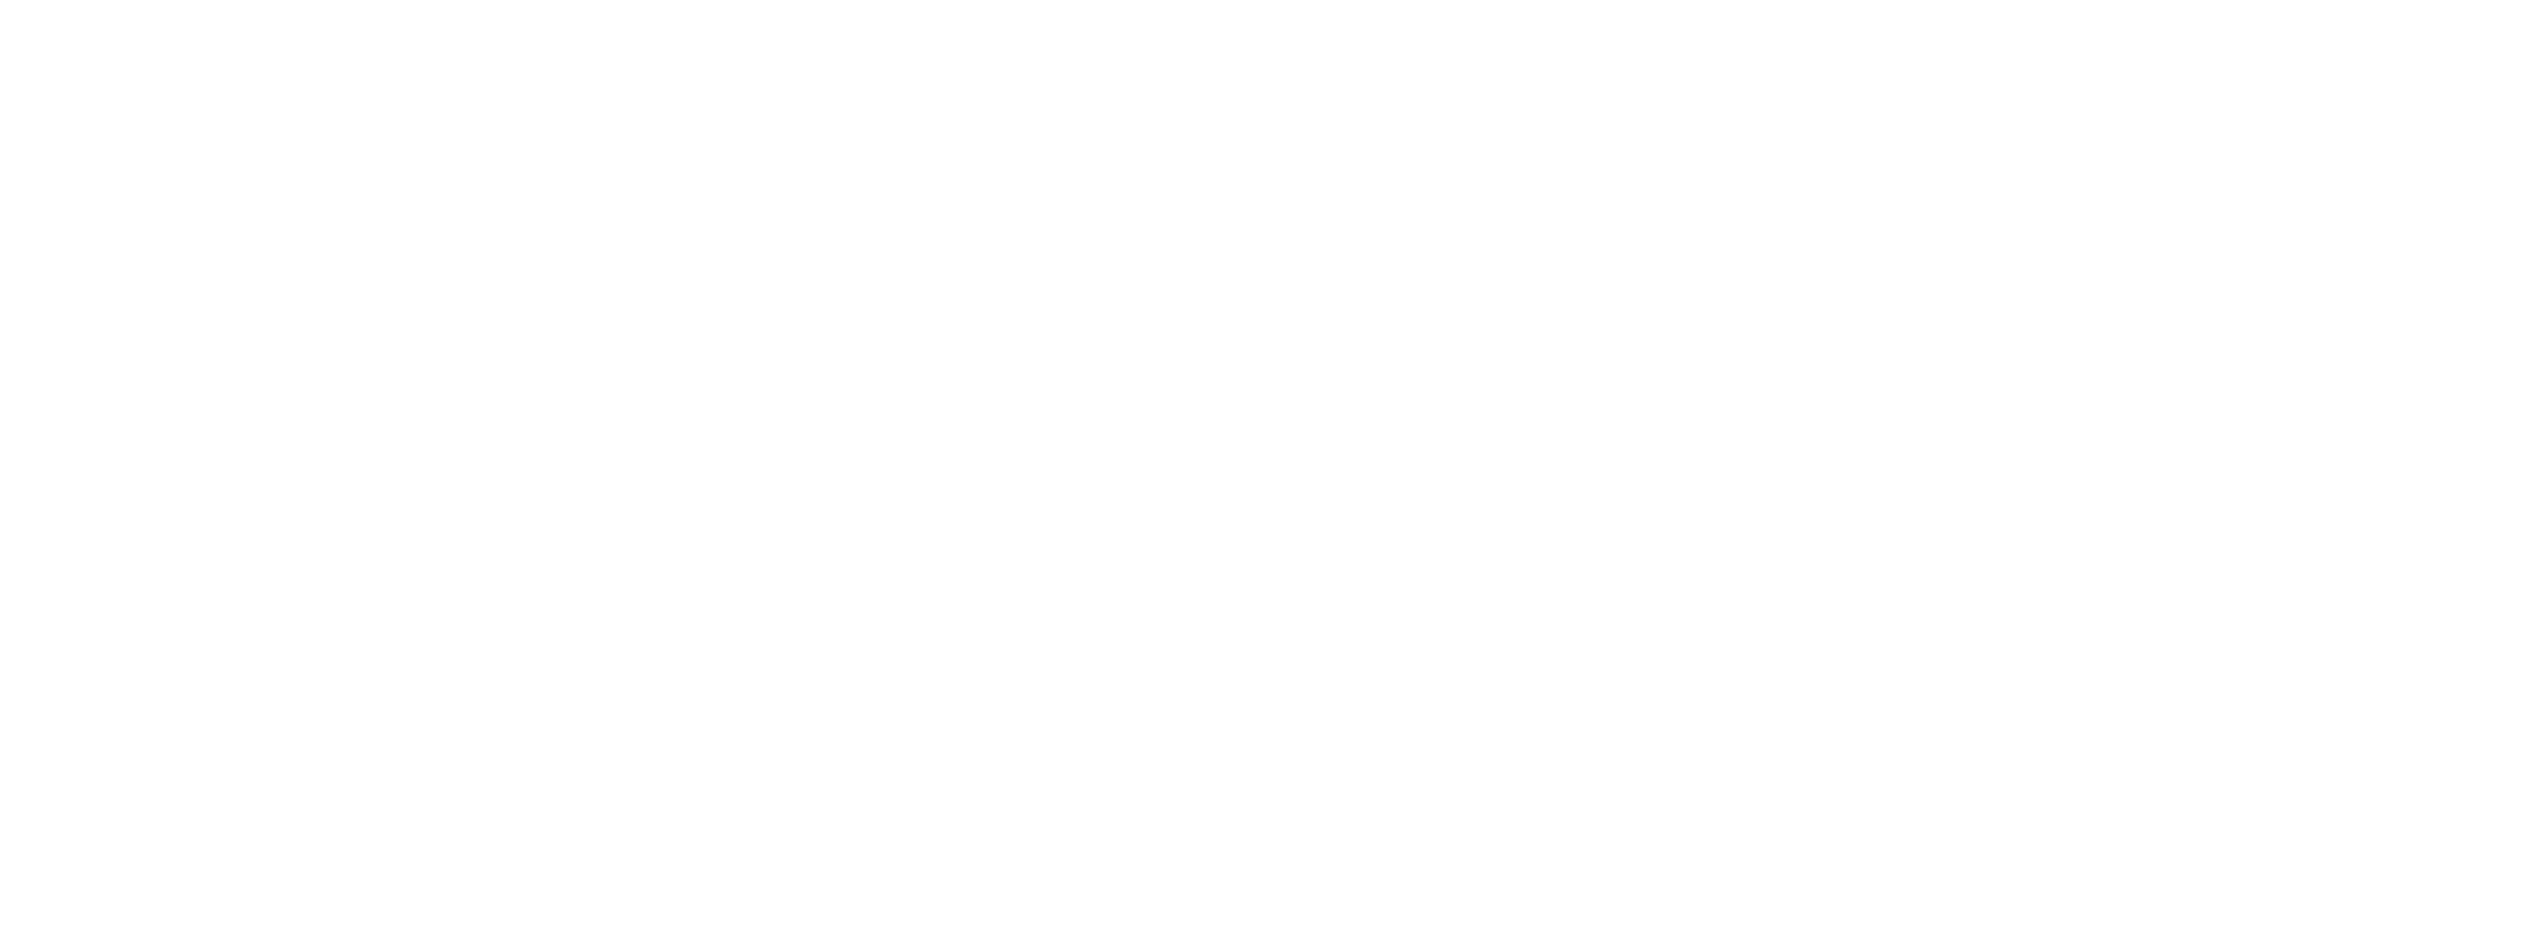 Frederique Constant logo white (1)